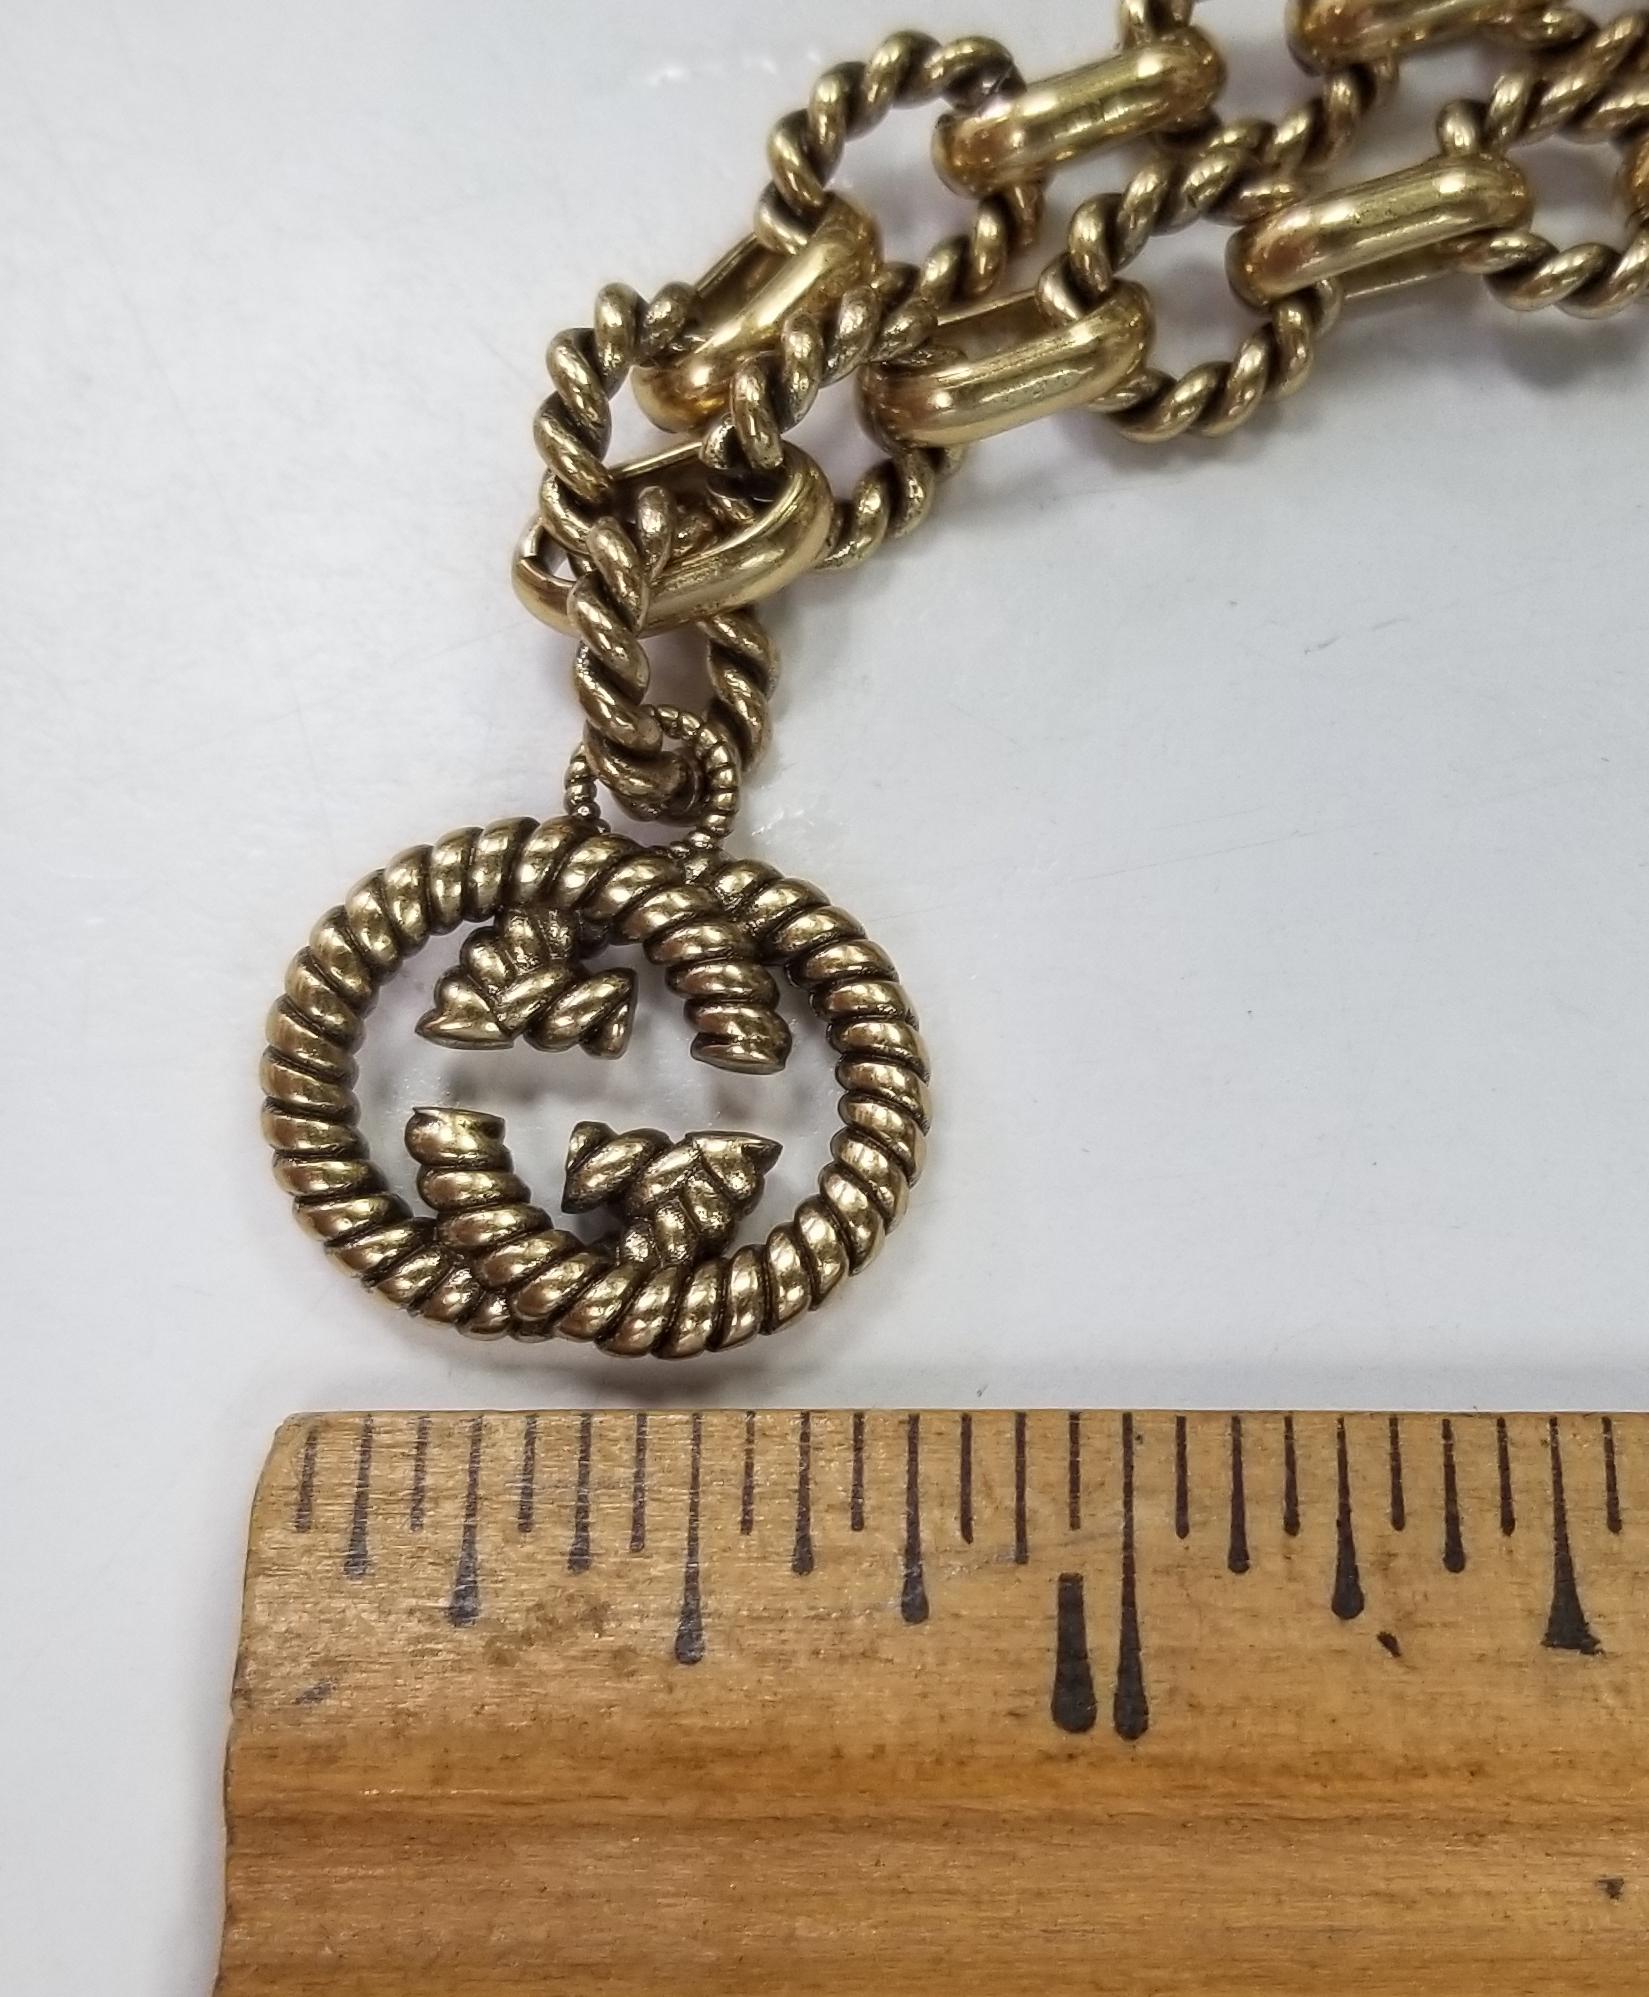 gucci necklace and bracelet set